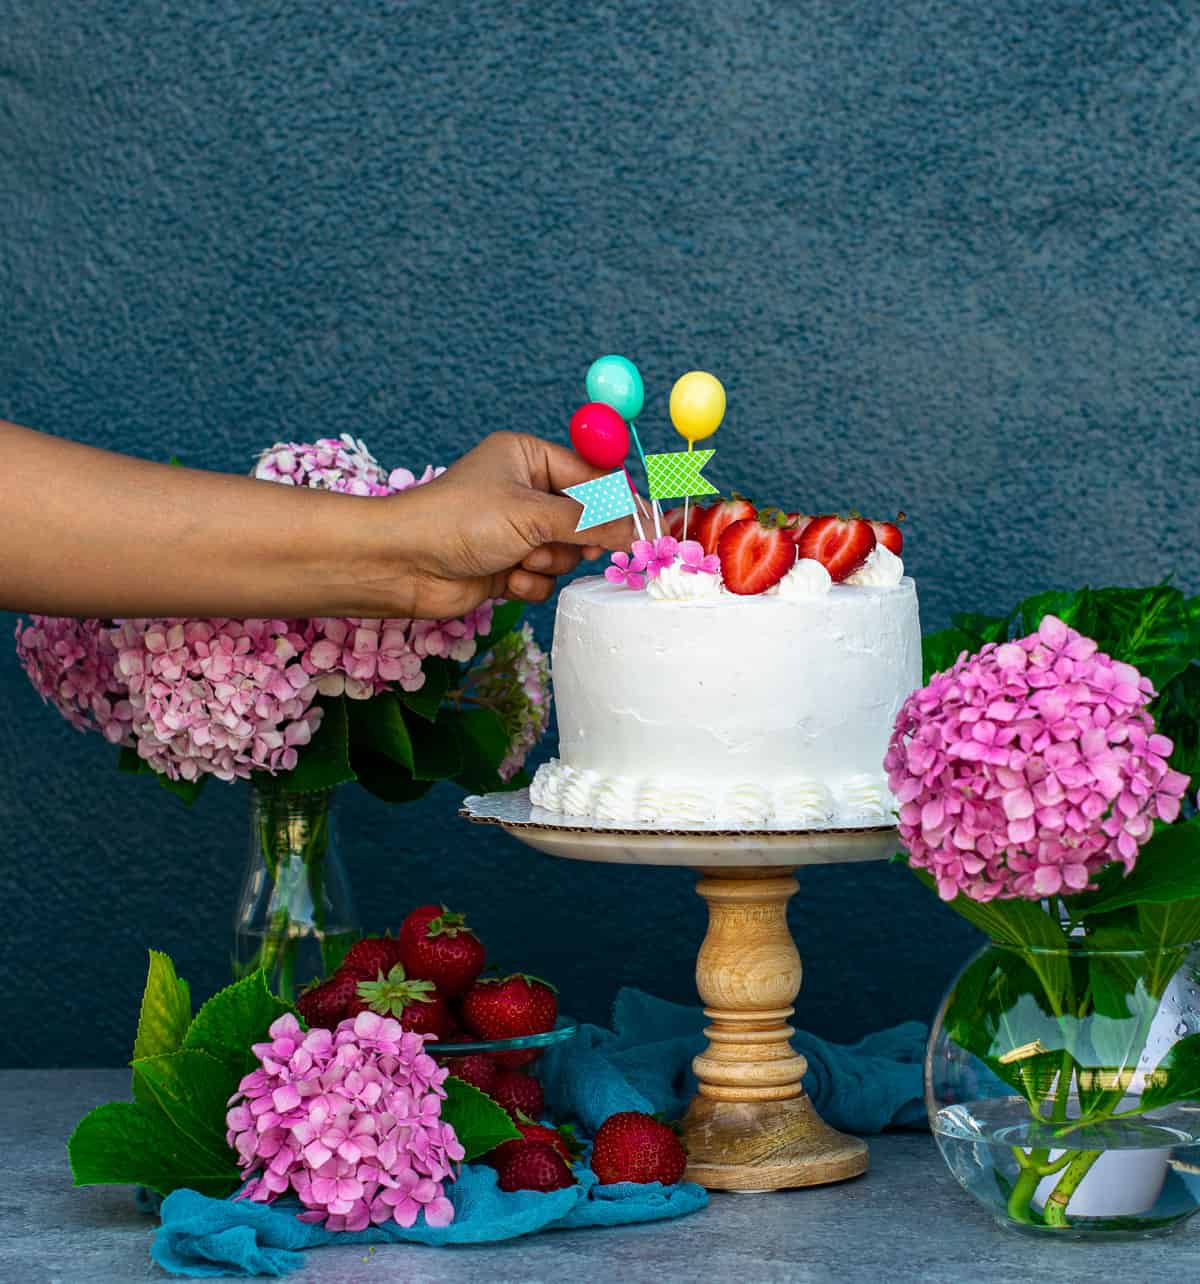 Putting decorations on Italian strawberry cream cake